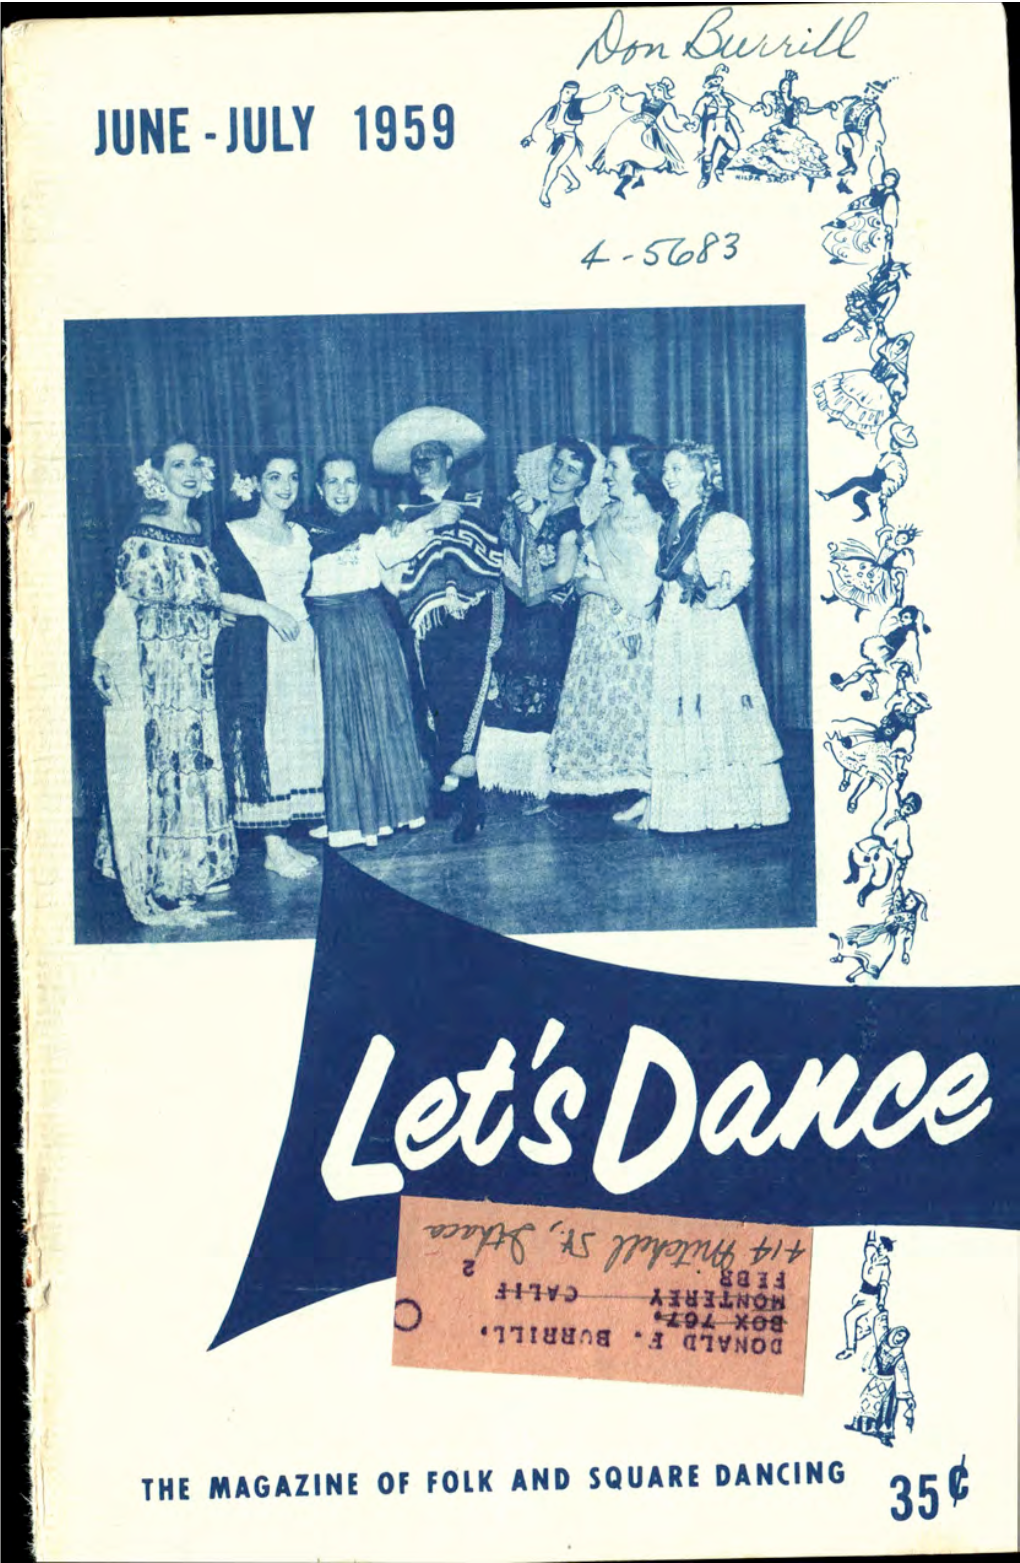 THI WAGAZINI of Folk and SQUARE DANCING ^^^ Ijstidome MAGAZINE of FOLK and SQUARE DANCING JUNE - JULY 1959 VOL